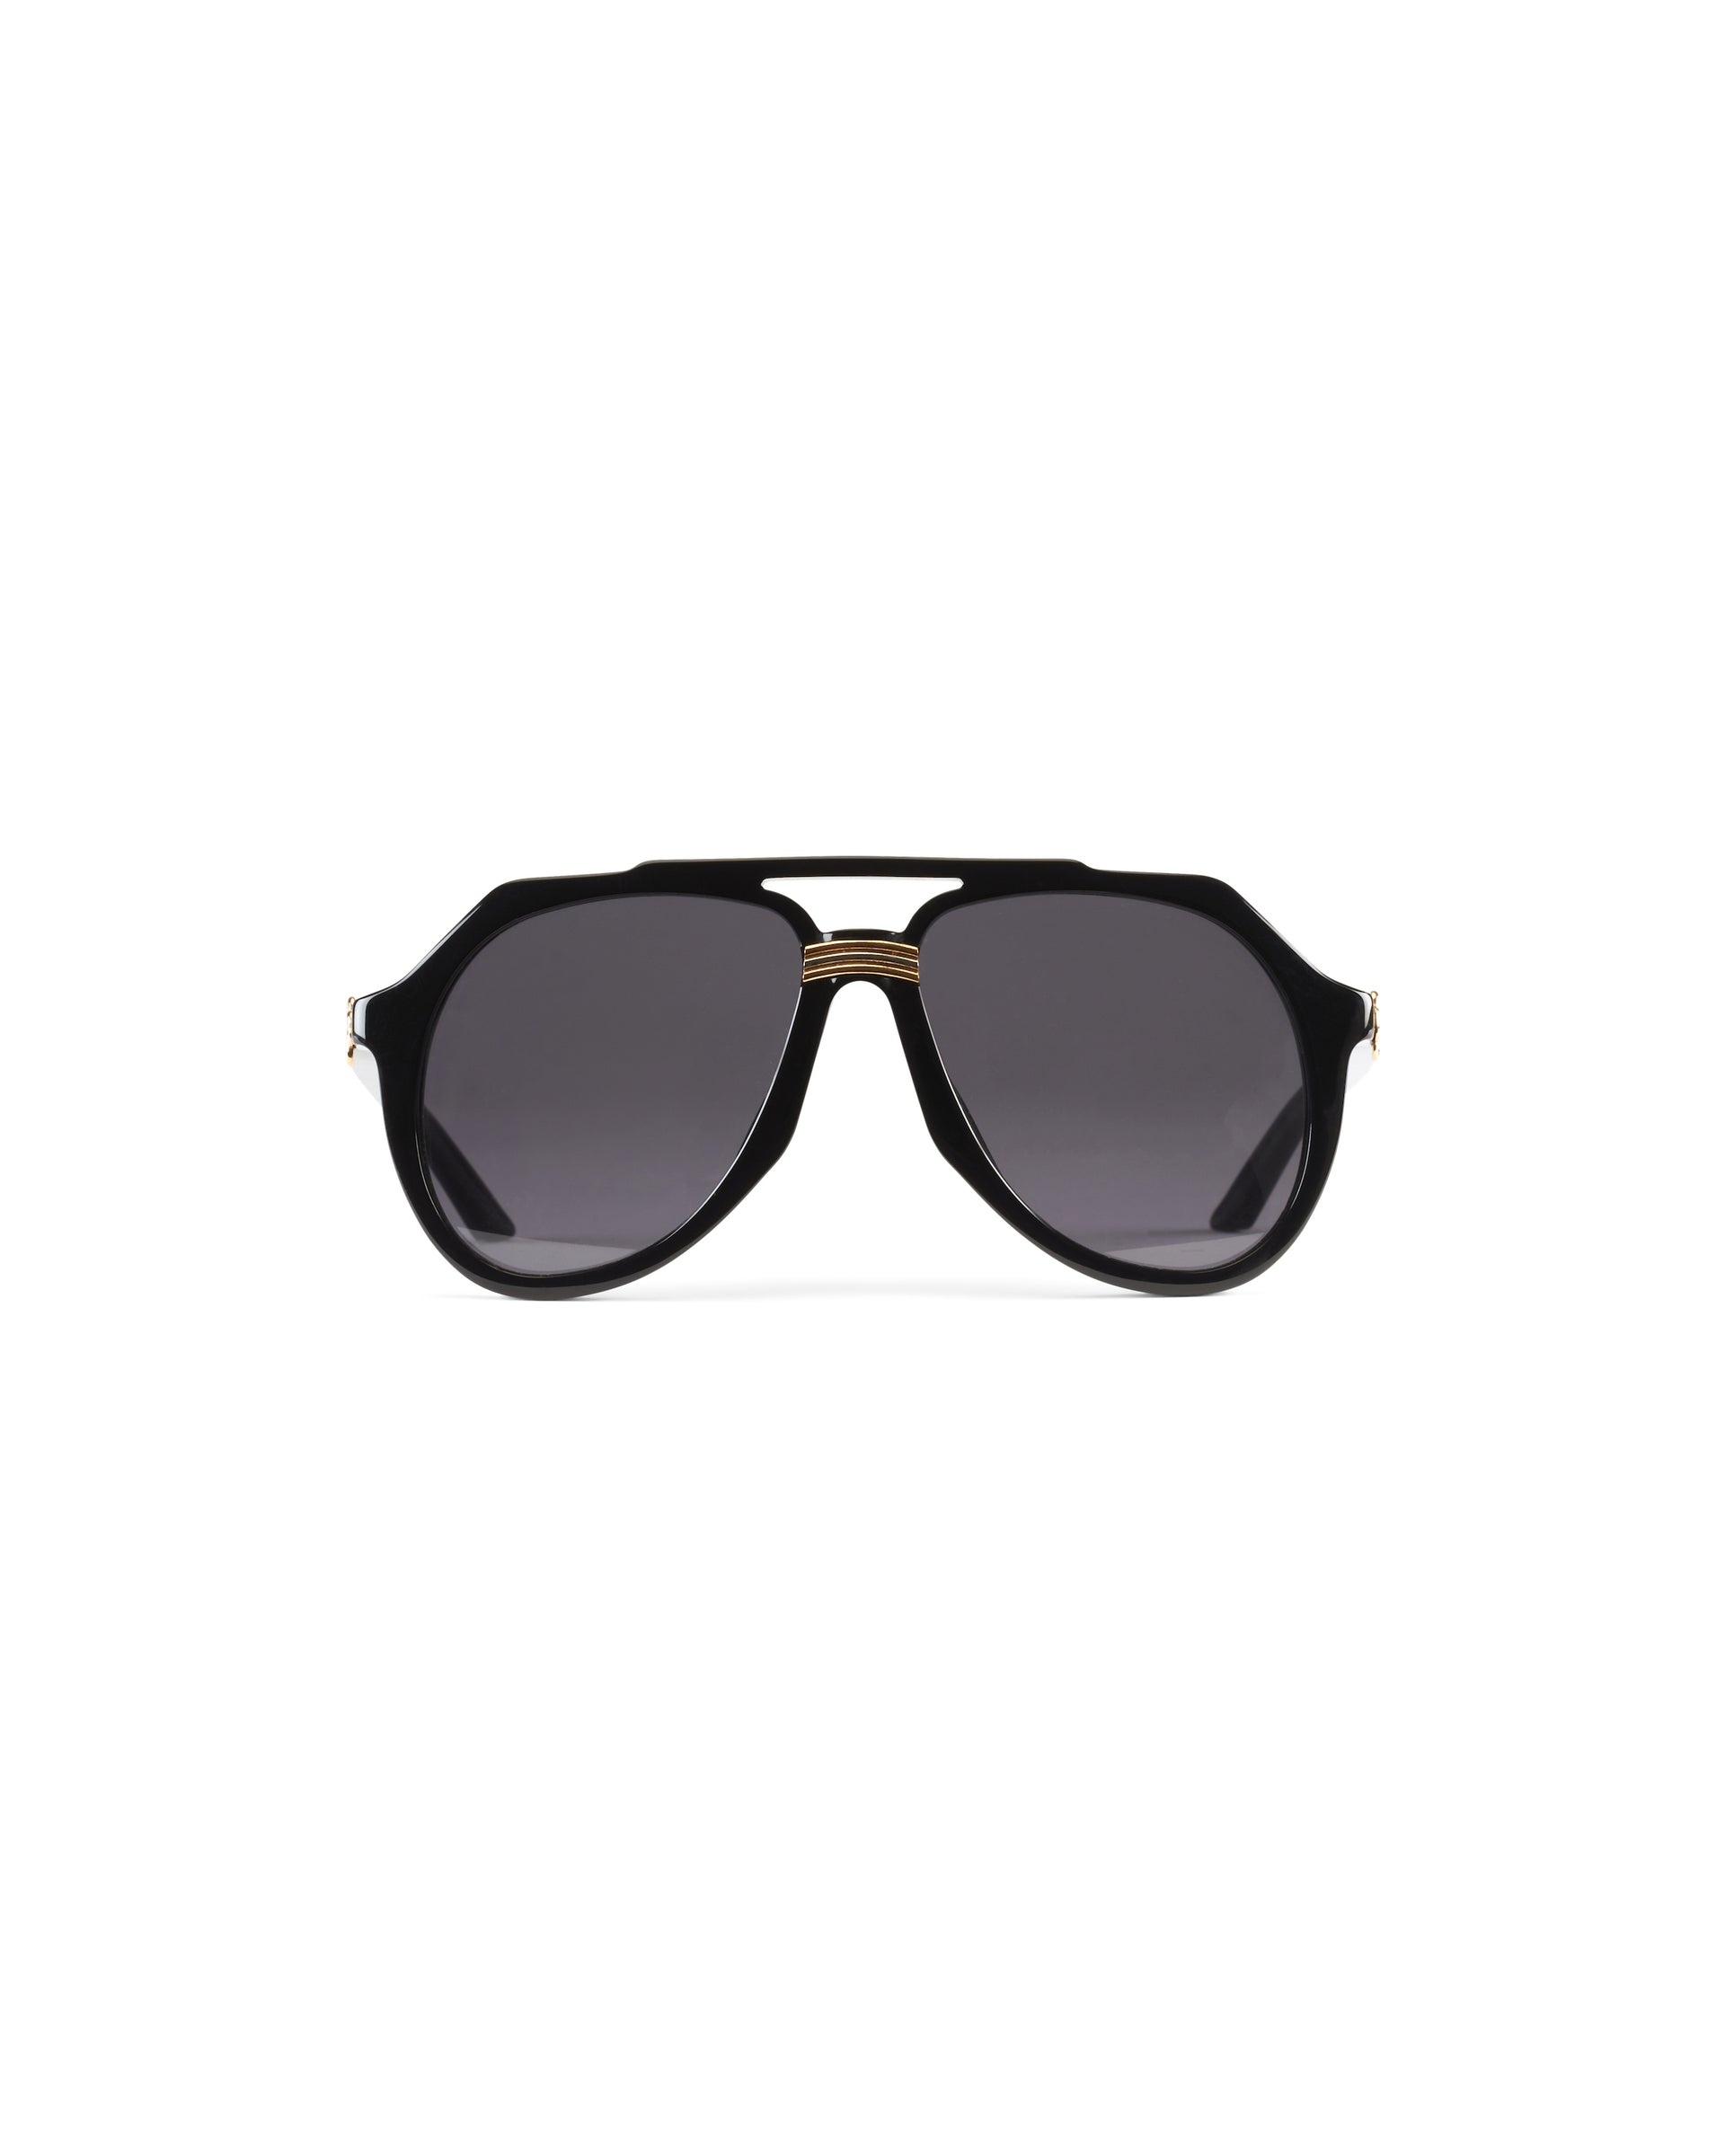 Rajio Black & Gold Sunglasses - 2